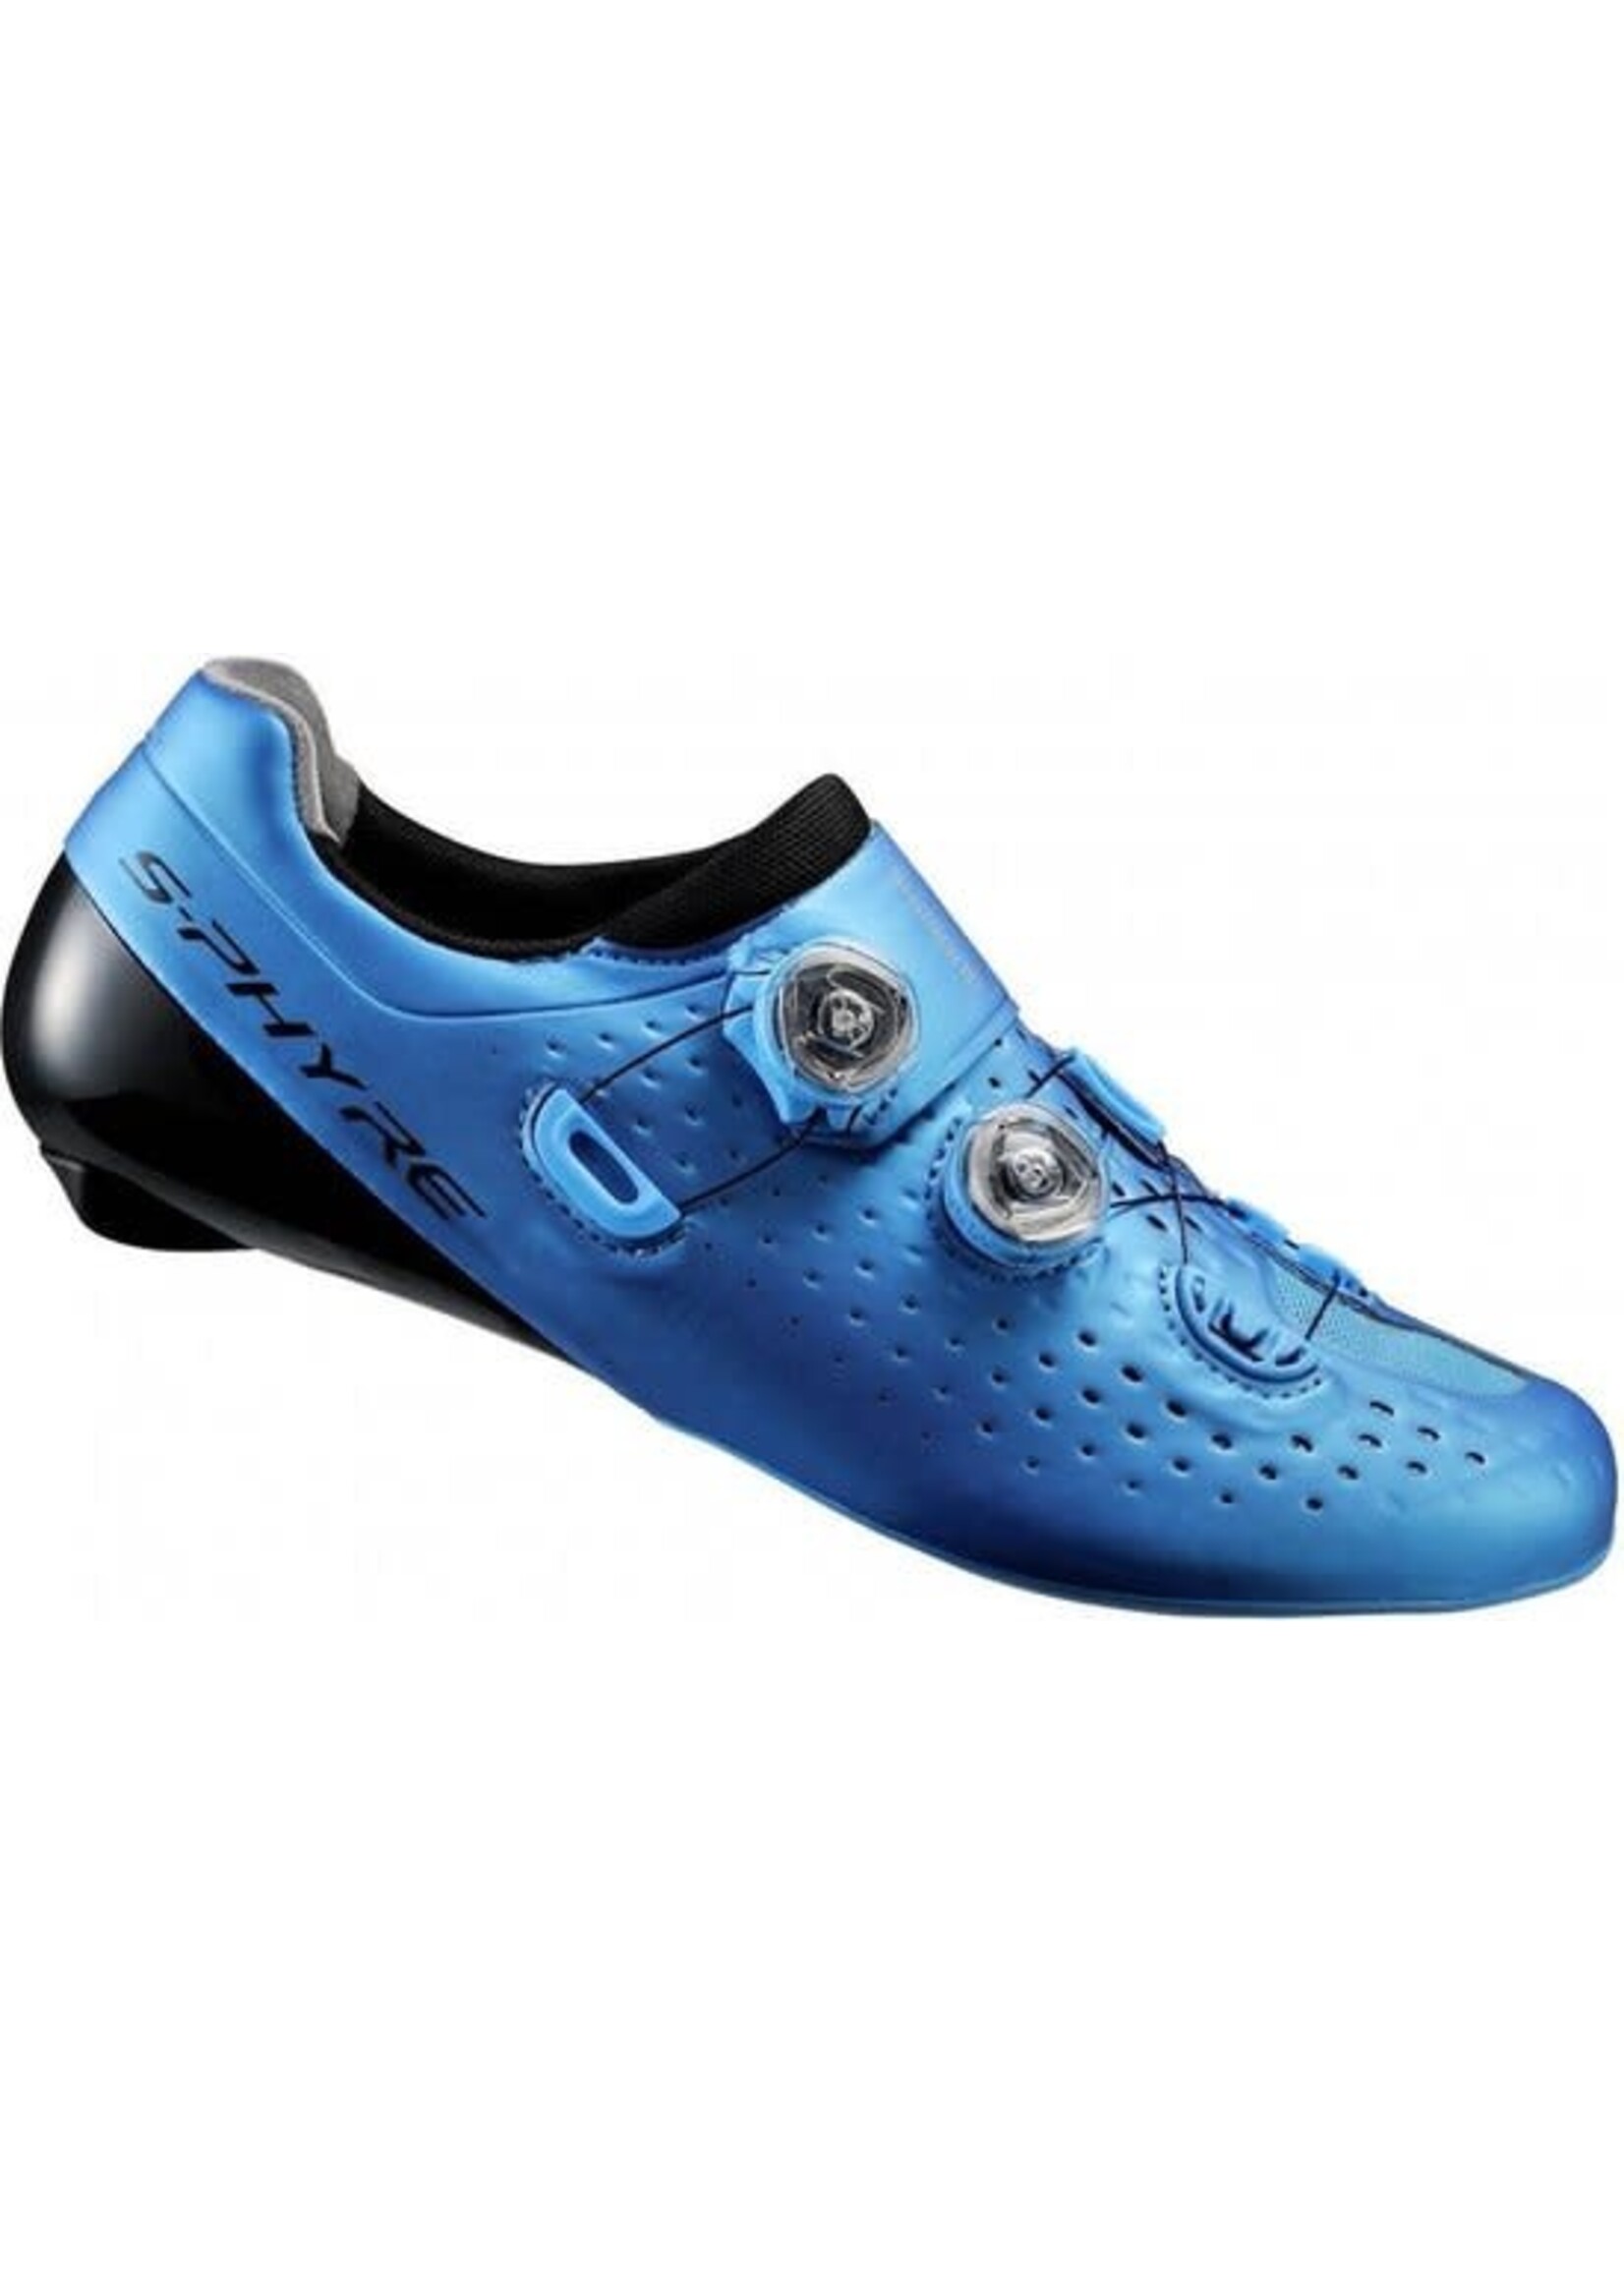 Shimano SH-RC9 Bicycle Shoes BLUE 46.0